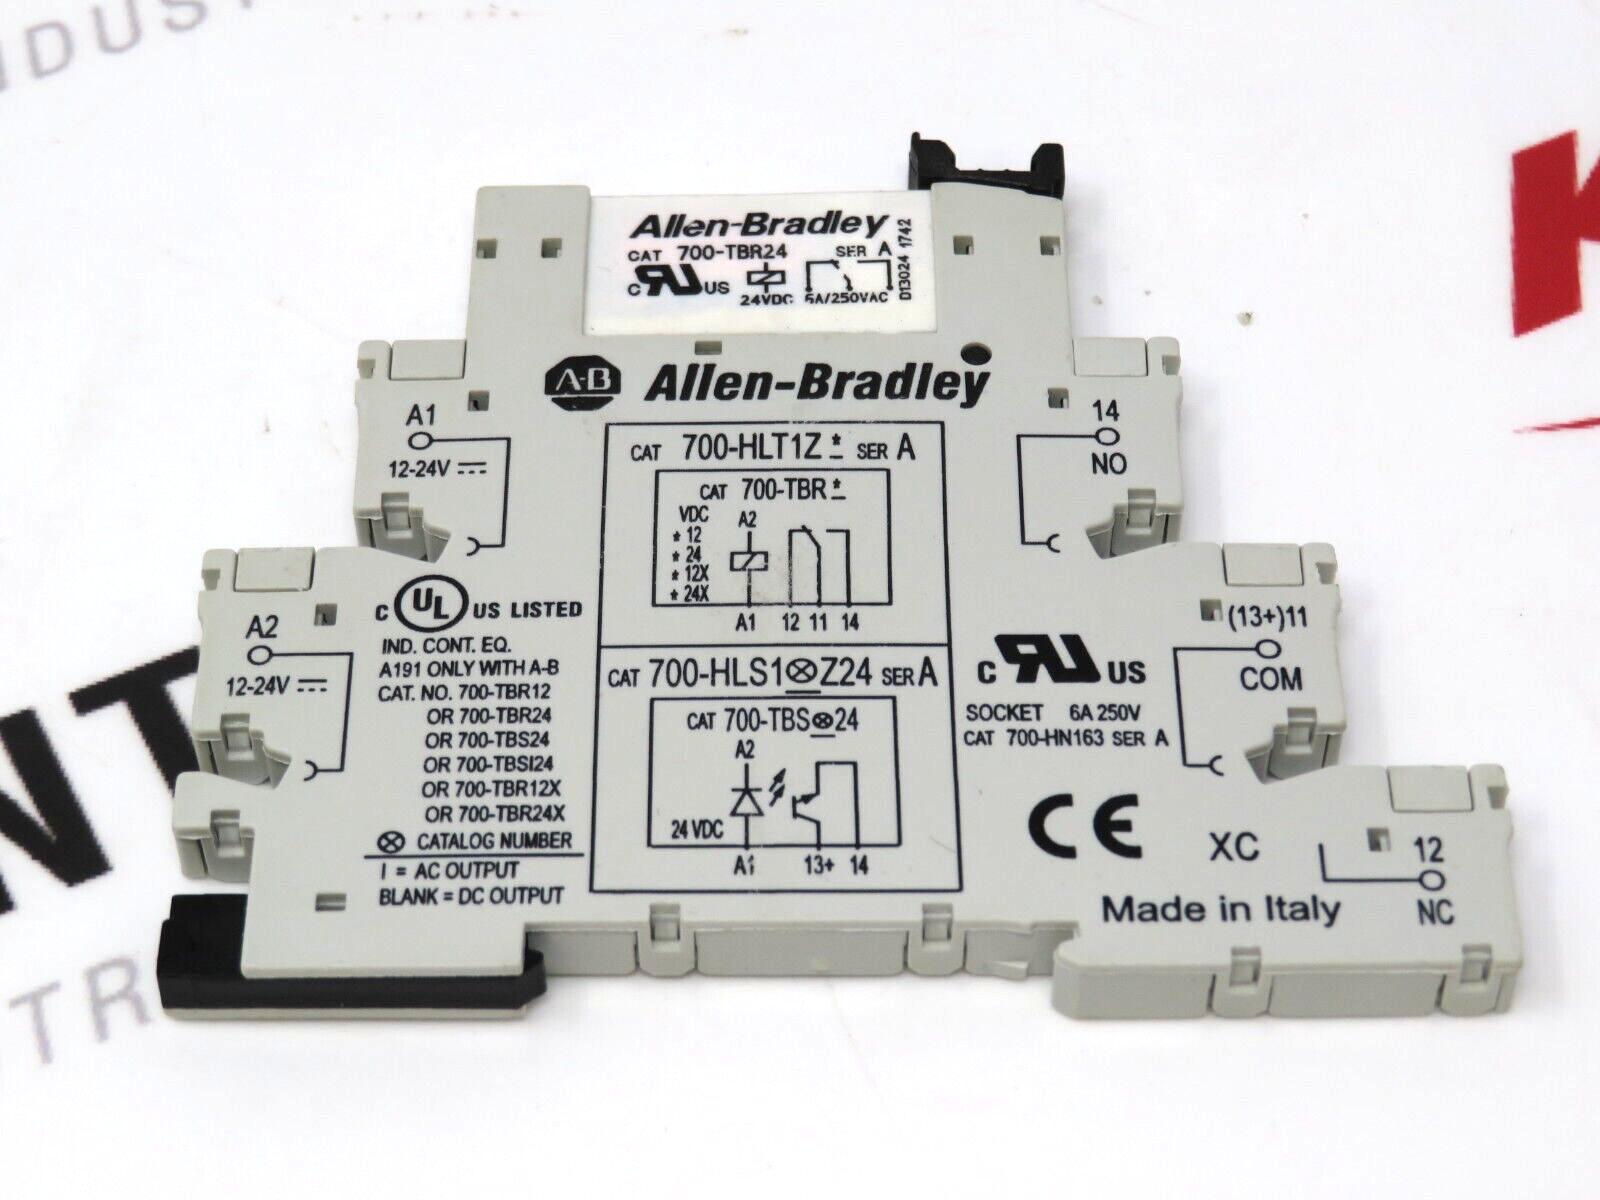 Allen-Bradley 700-HLT1Z/700TBR24 Terminal Block & Solid State Relay